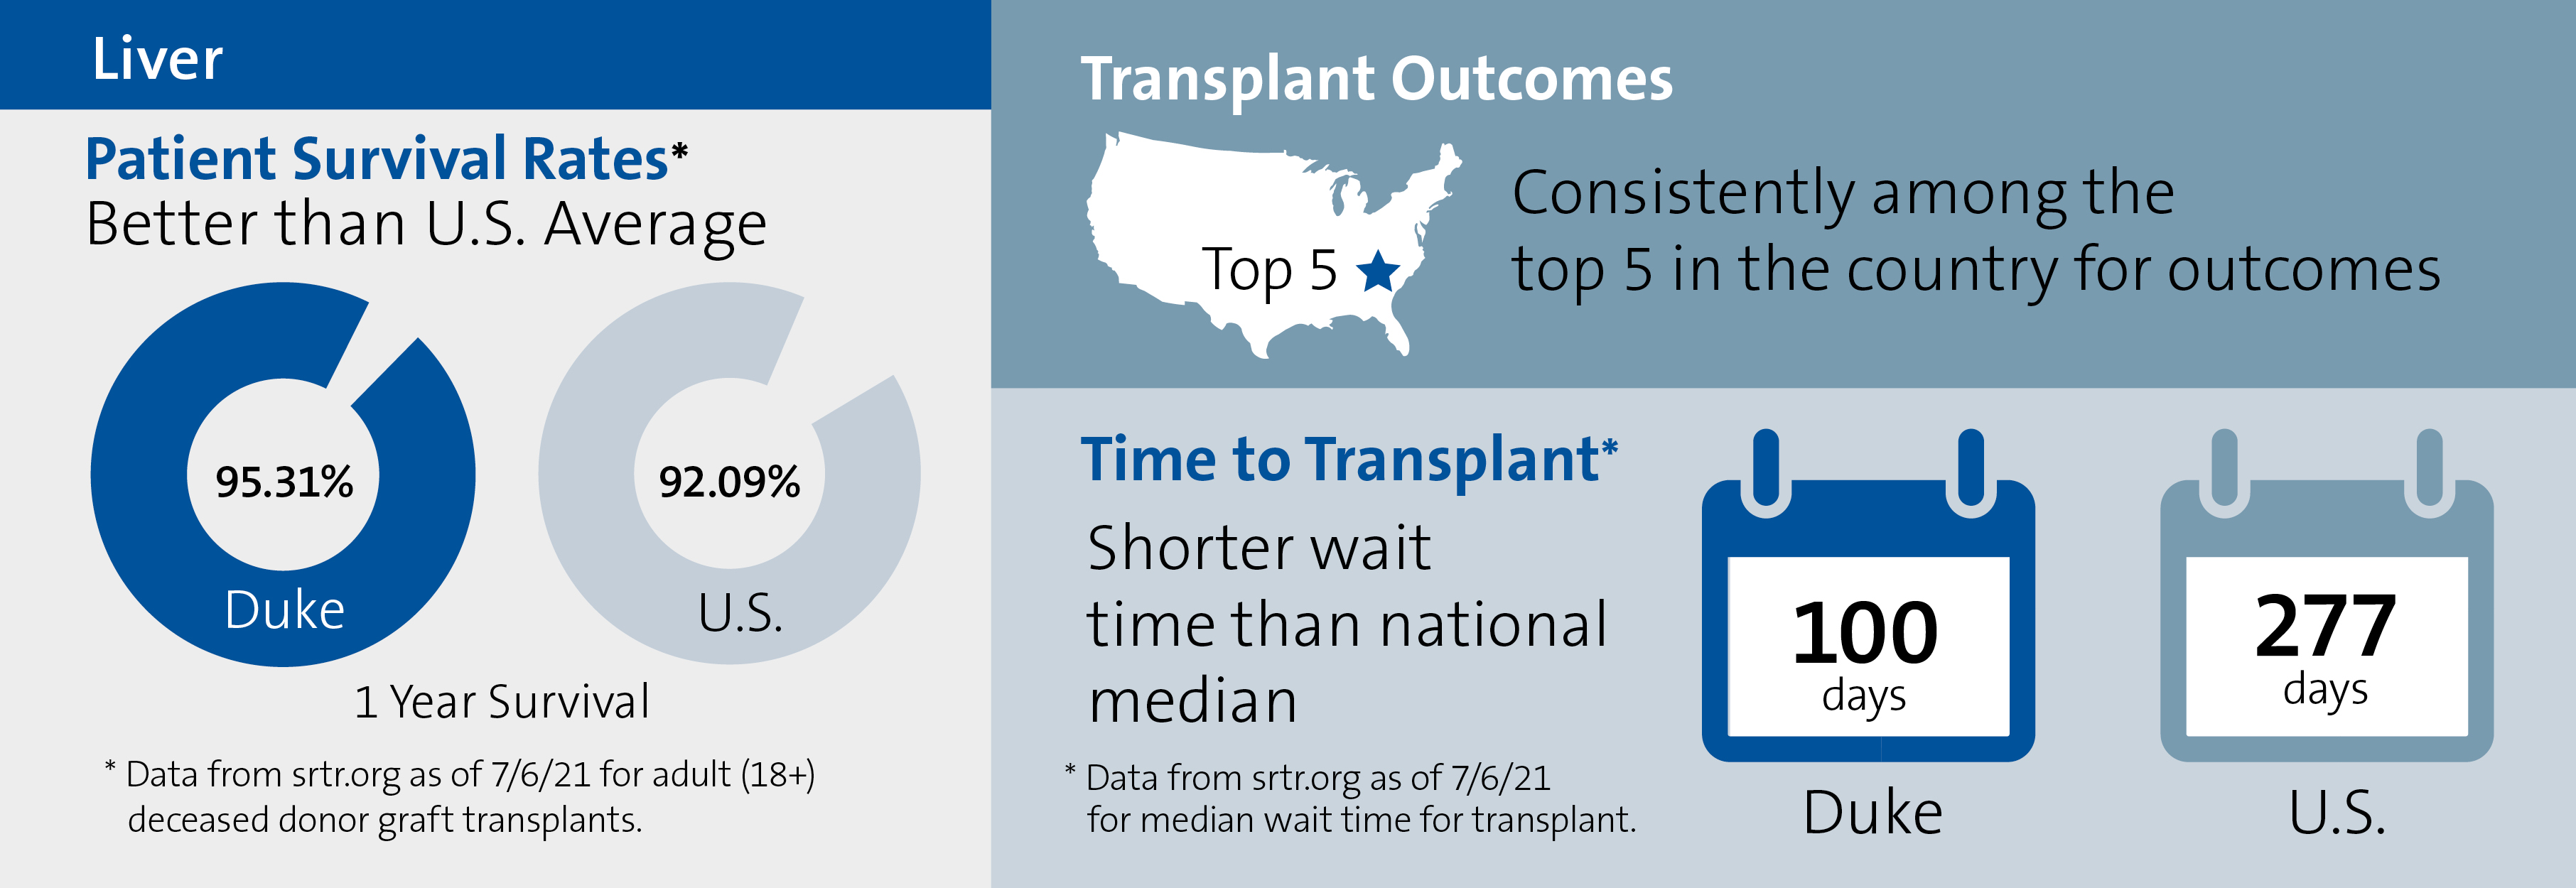 Outcomes for liver transplant at Duke